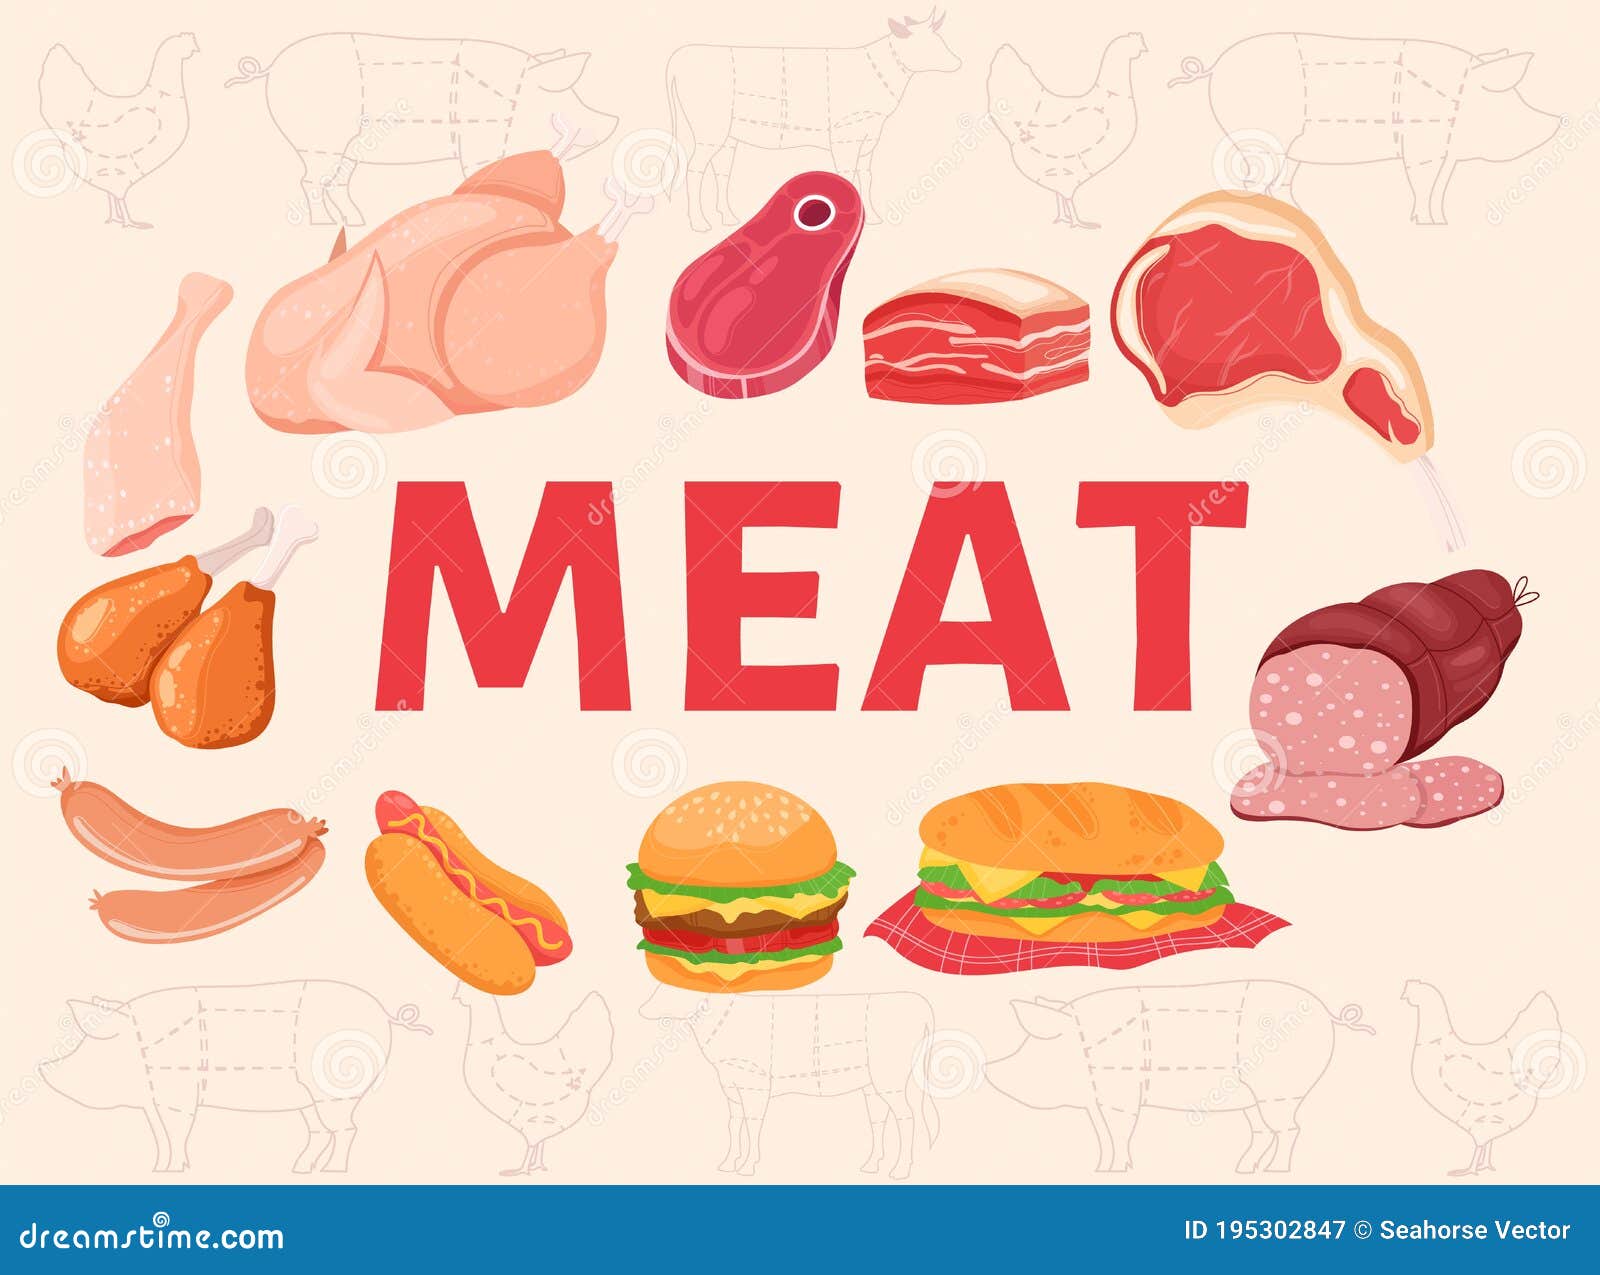 Meat слова. Meat слово. Мясо картинка и слово. Meat Words. Meat слово в картинке.